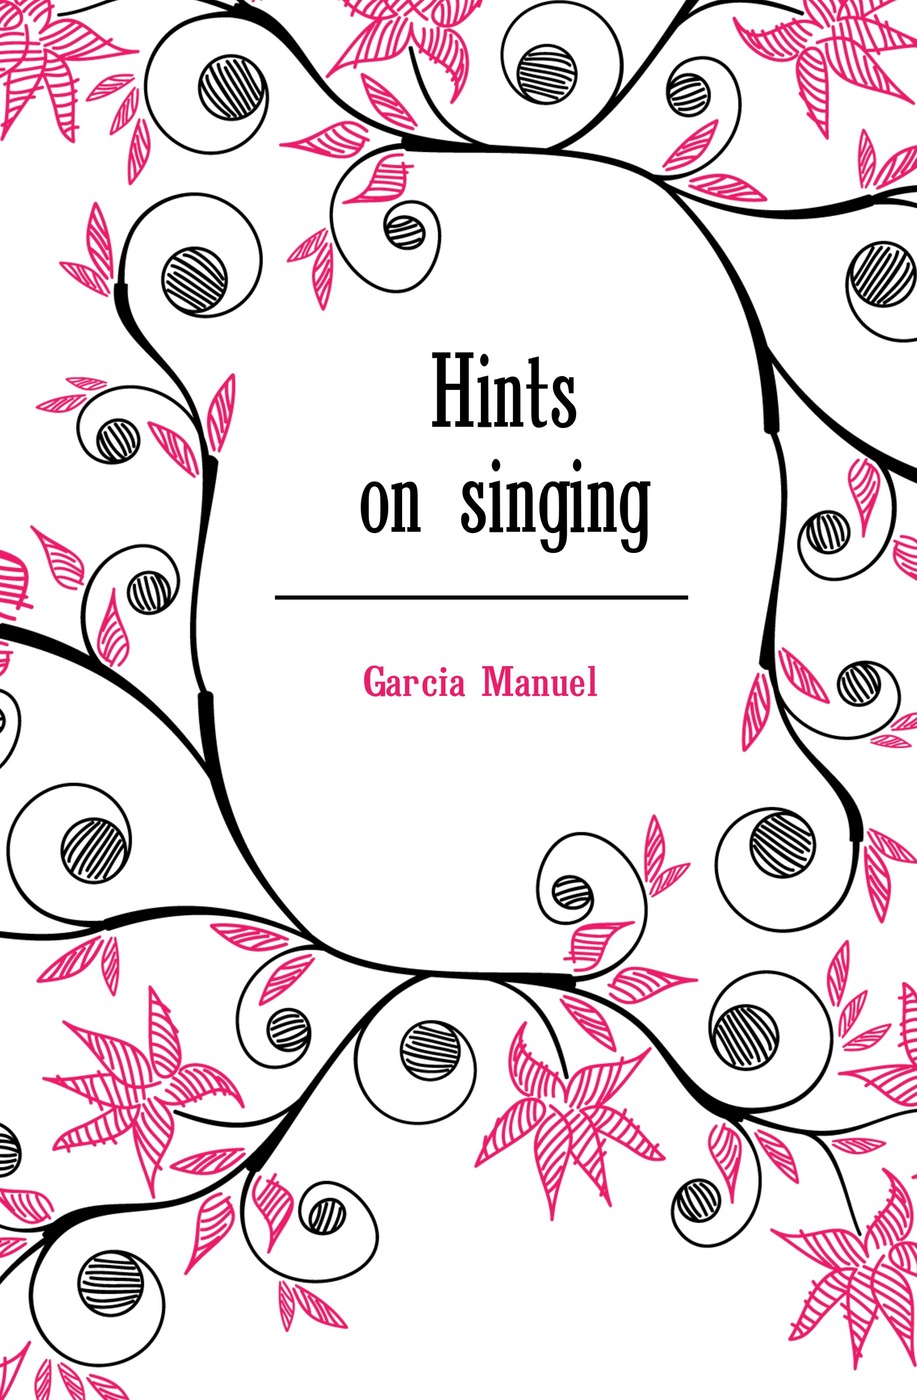 Hints on singing